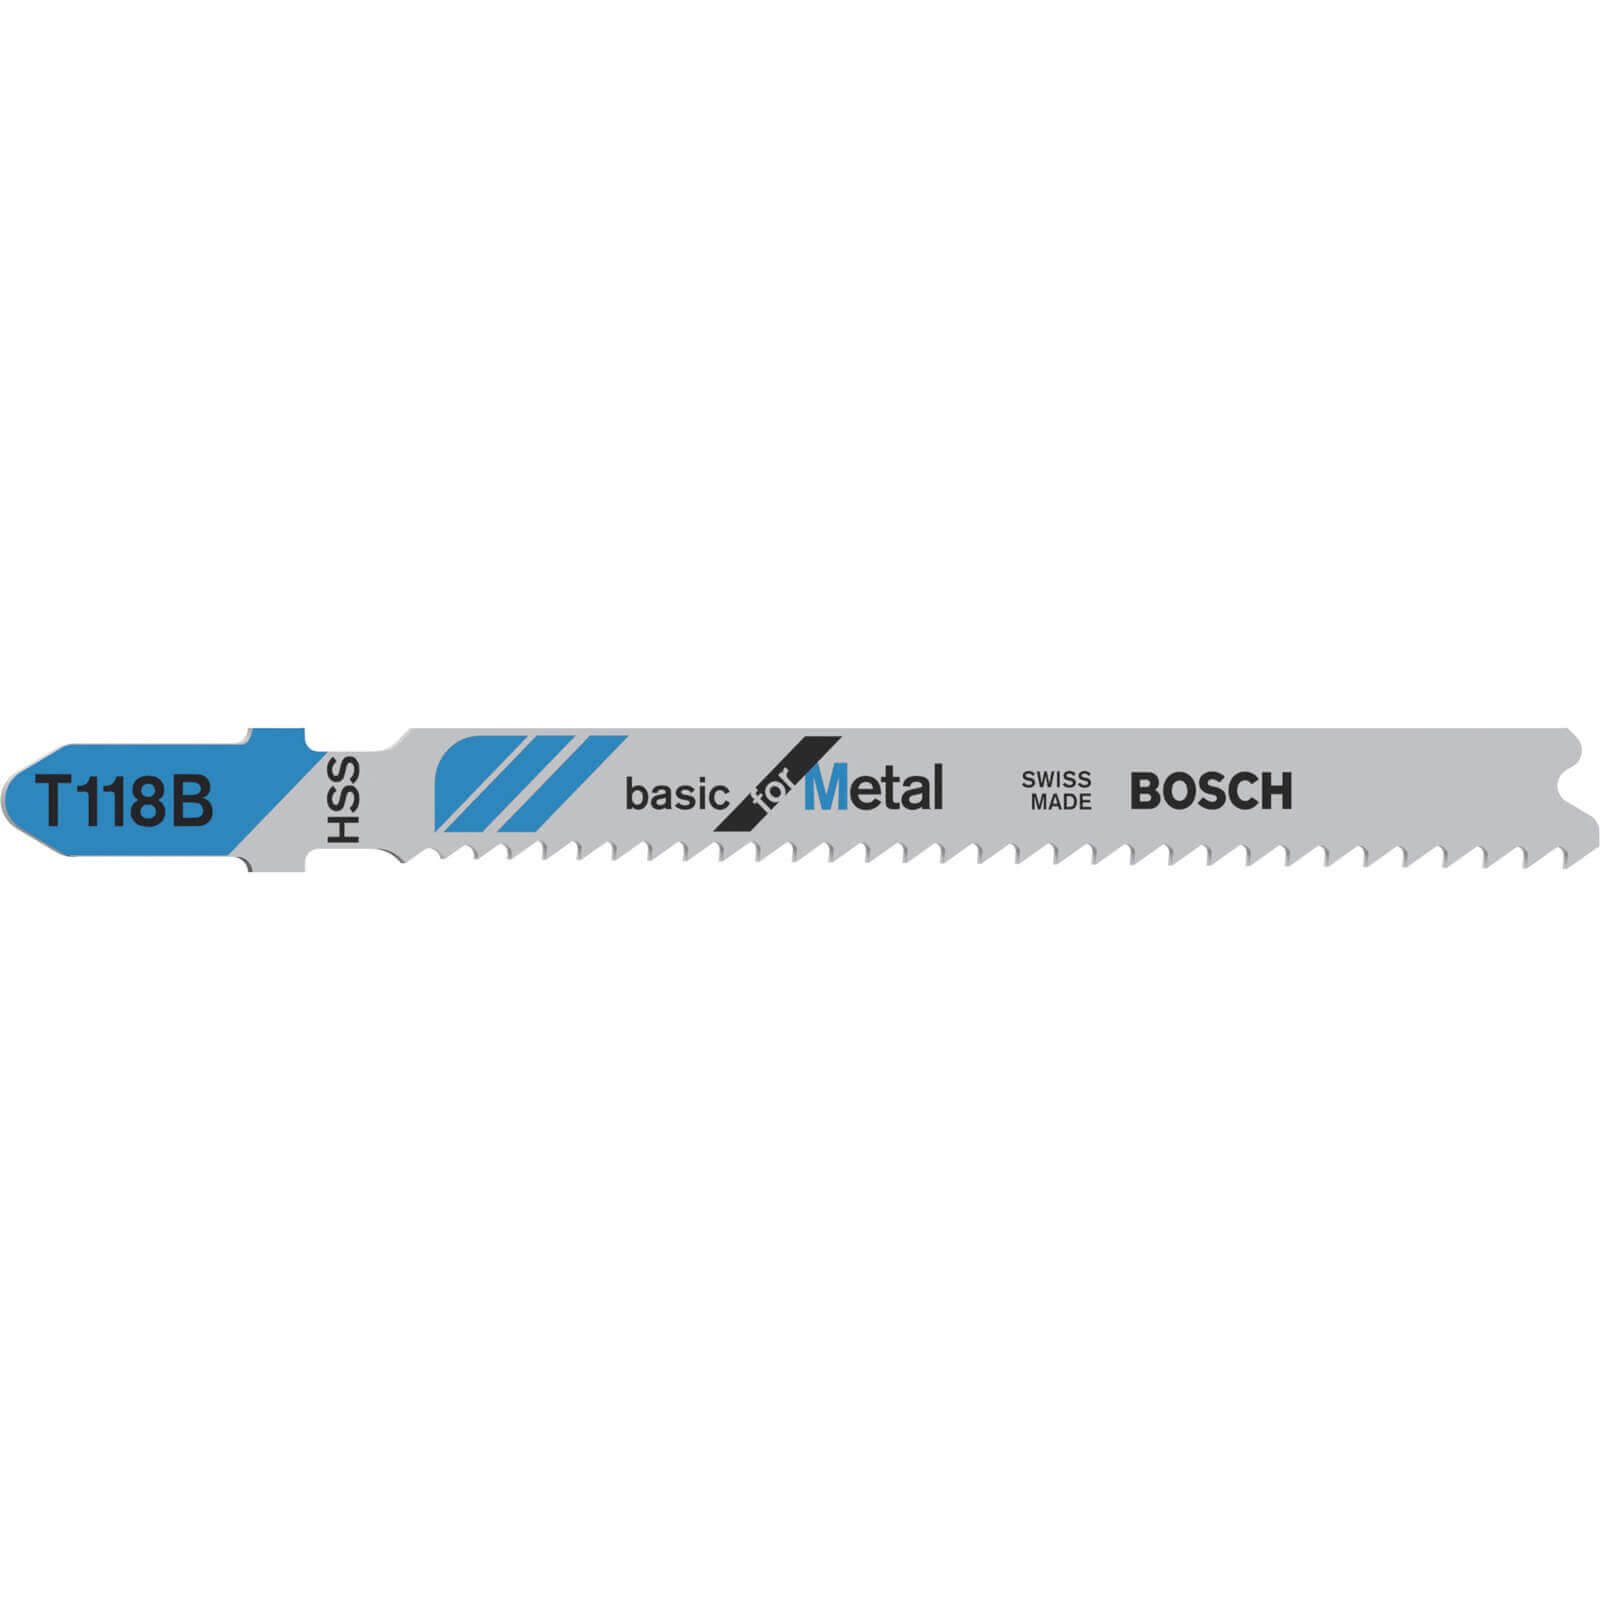 Photo of Bosch T118 B Metal Cutting Jigsaw Blades Pack Of 3